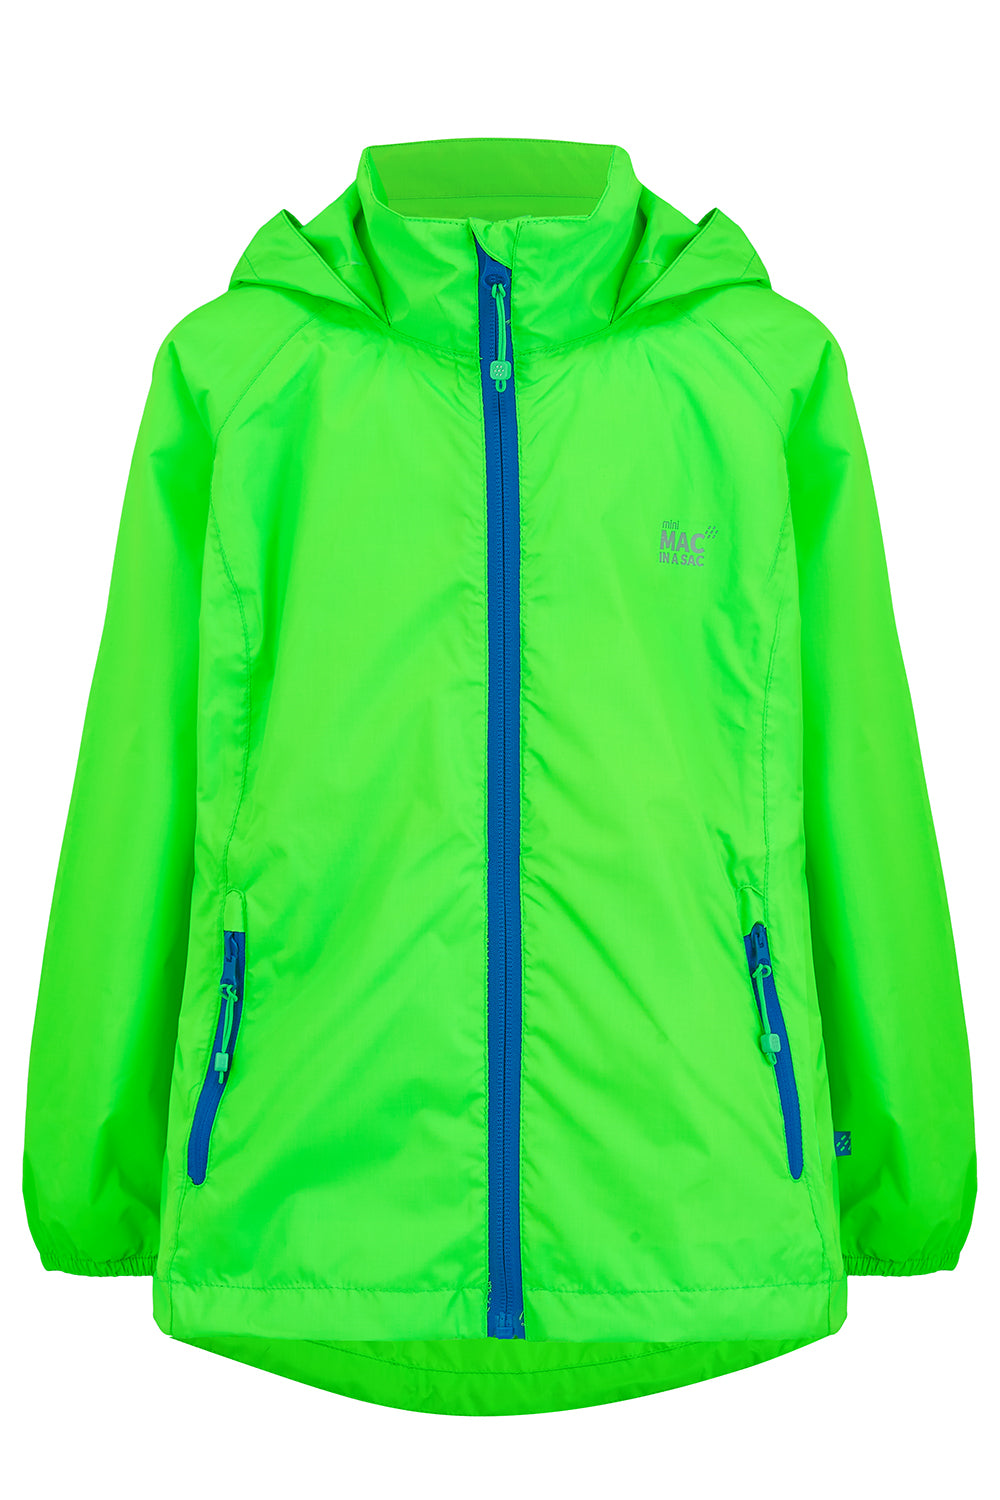 MICHAEL KORS Green Jacket Coat Child SIZE 7 Children Kids MK Sherpa | eBay